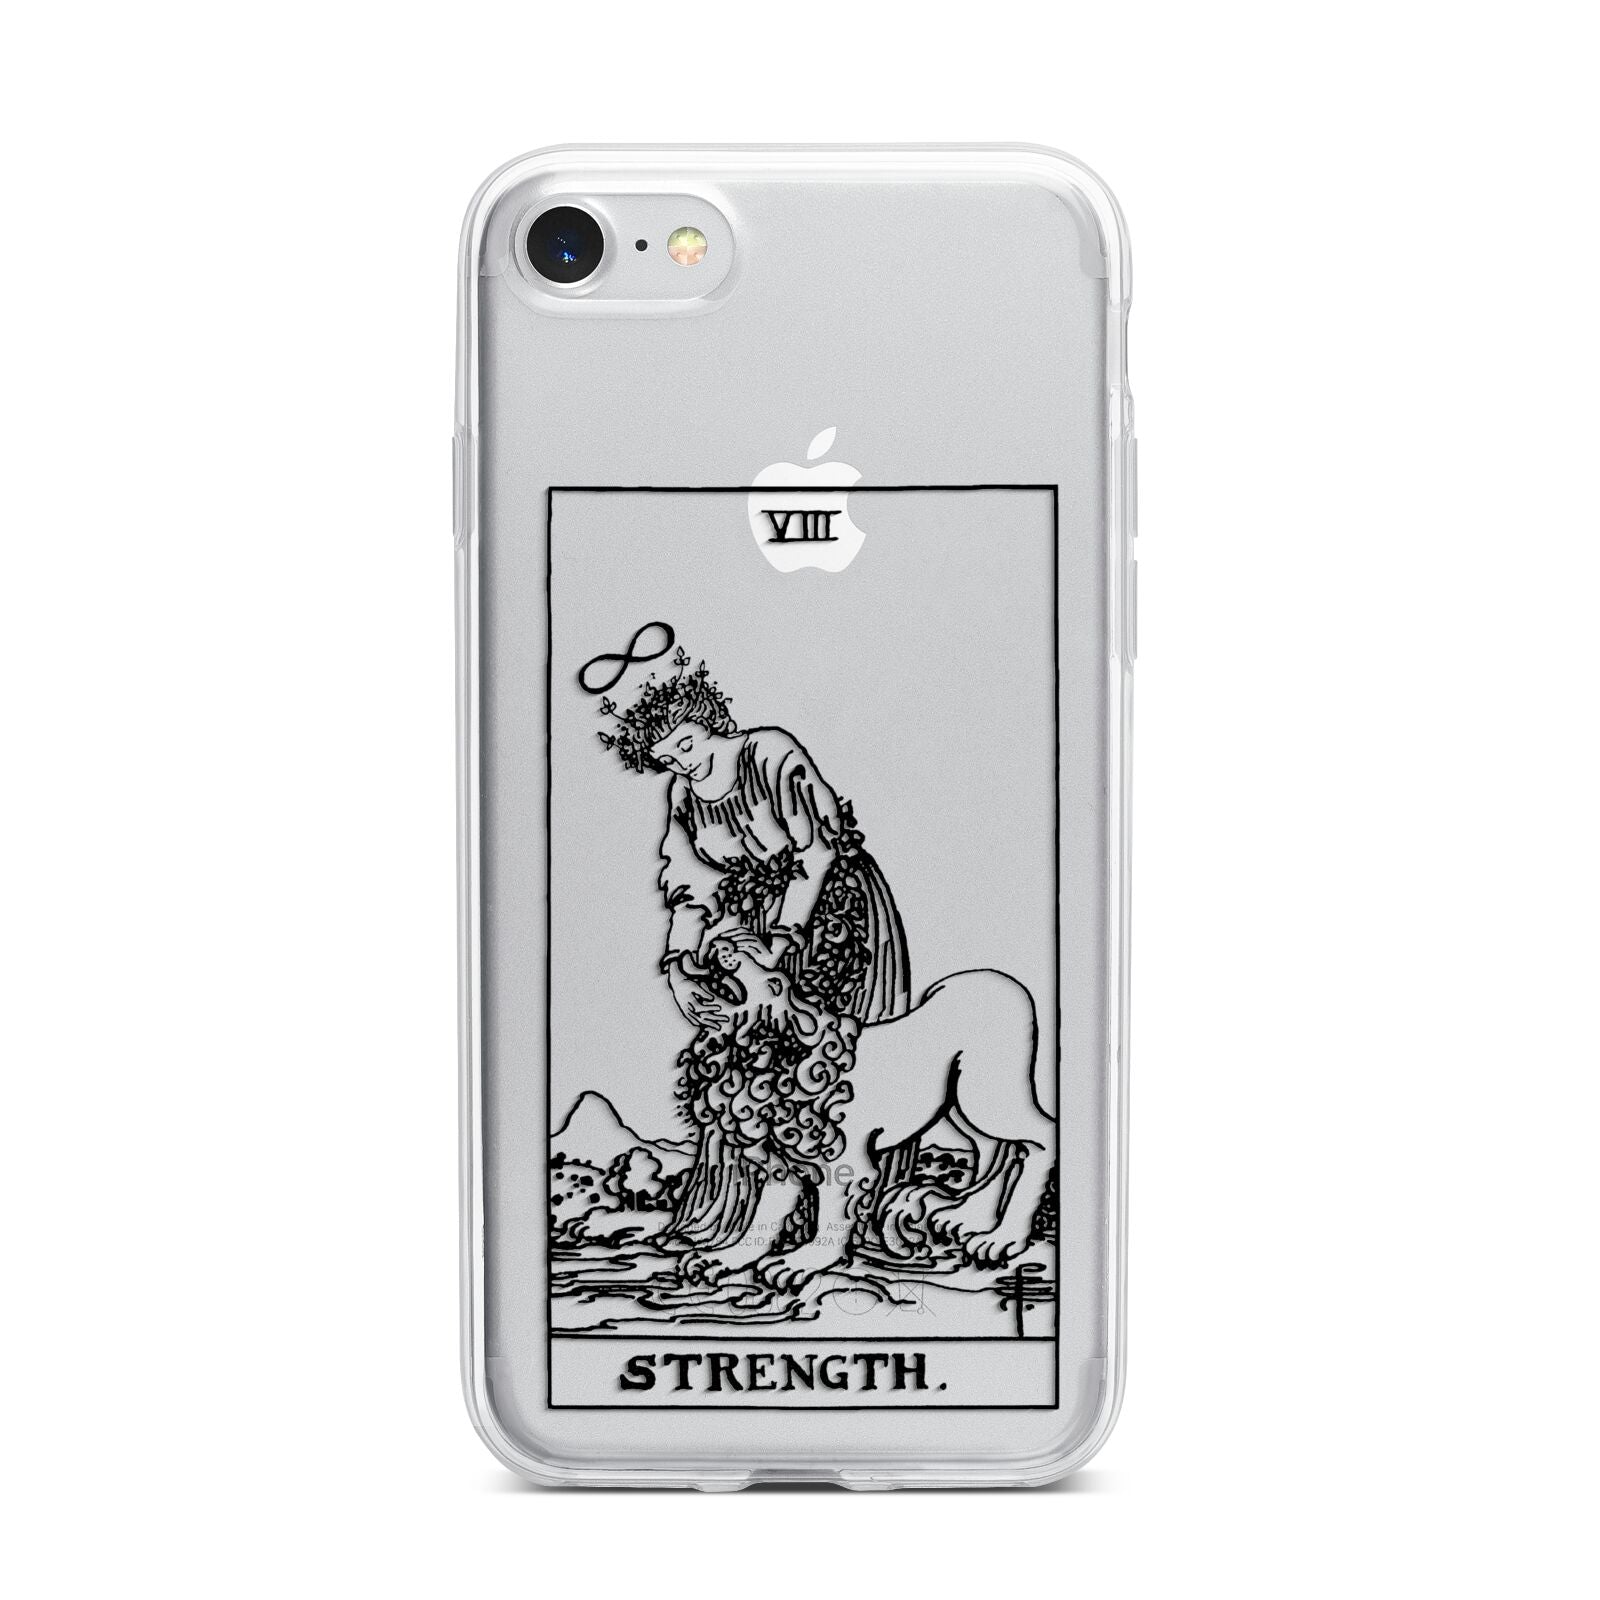 Strength Monochrome Tarot Card iPhone 7 Bumper Case on Silver iPhone